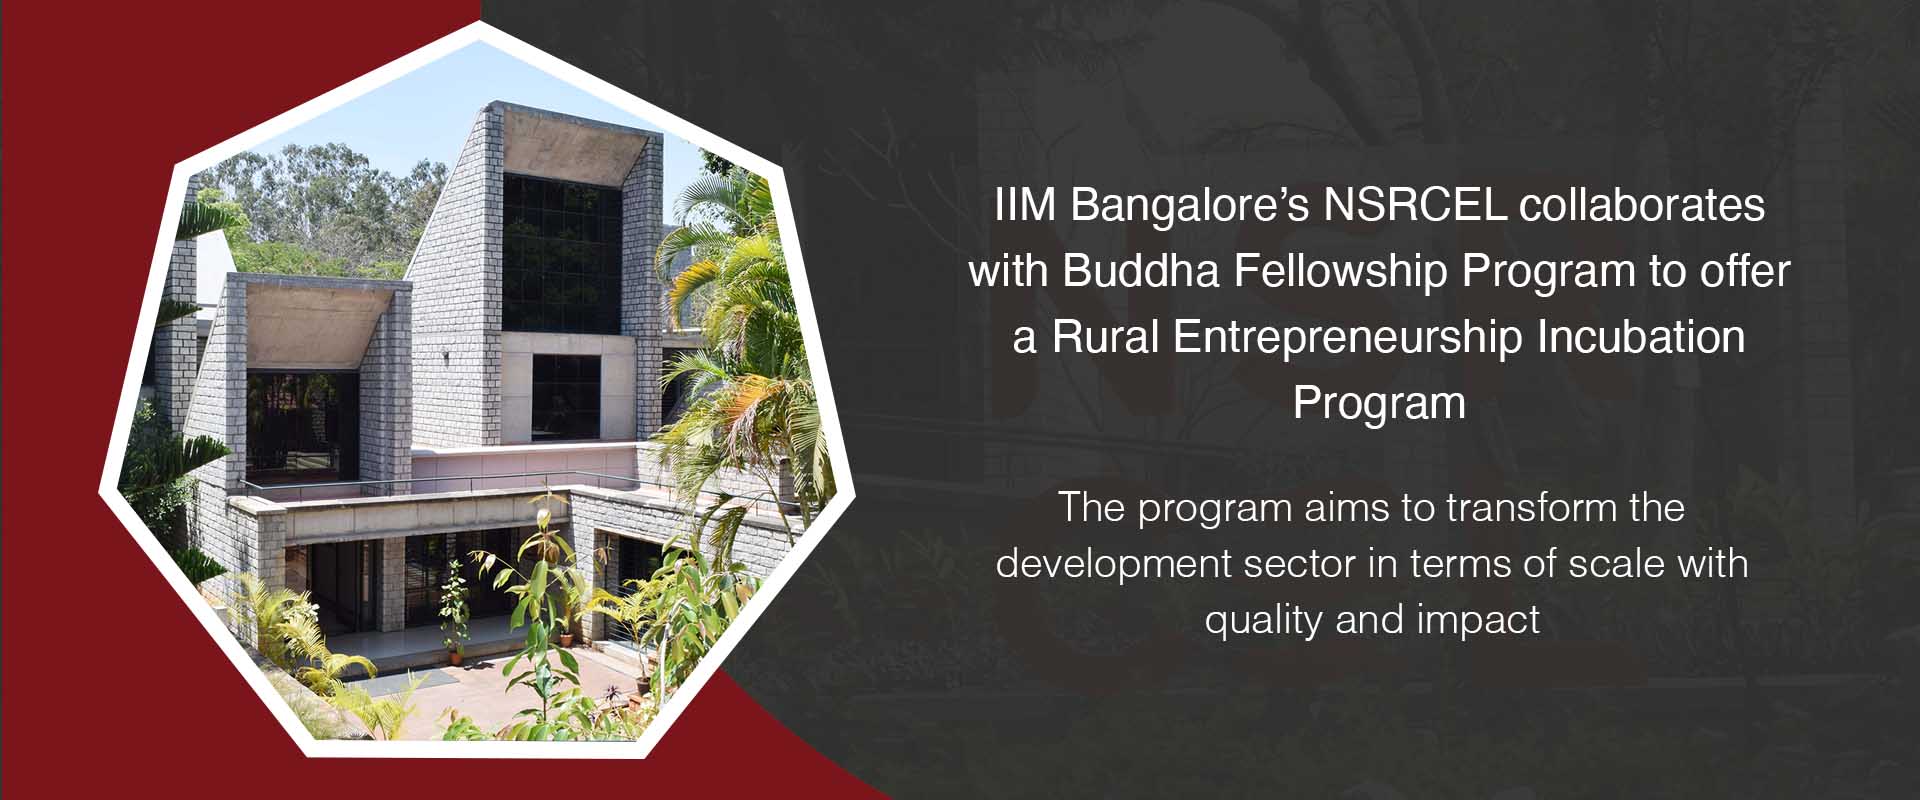 NSRCEL collaborates with Buddha Fellowship Program to offer a Rural Entrepreneurship Incubation Program